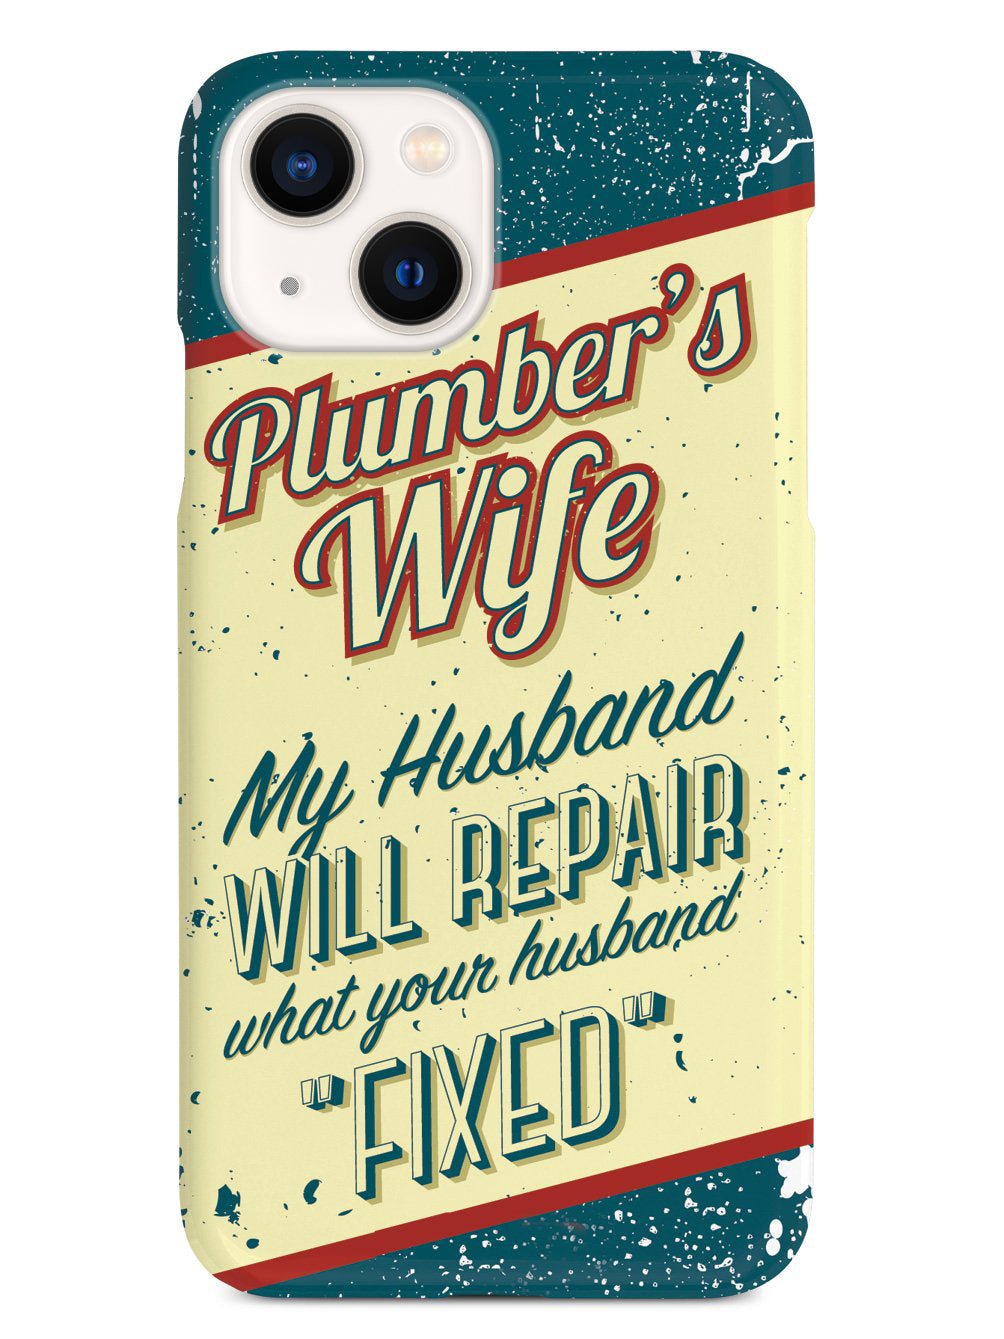 Plumber's Wife Case